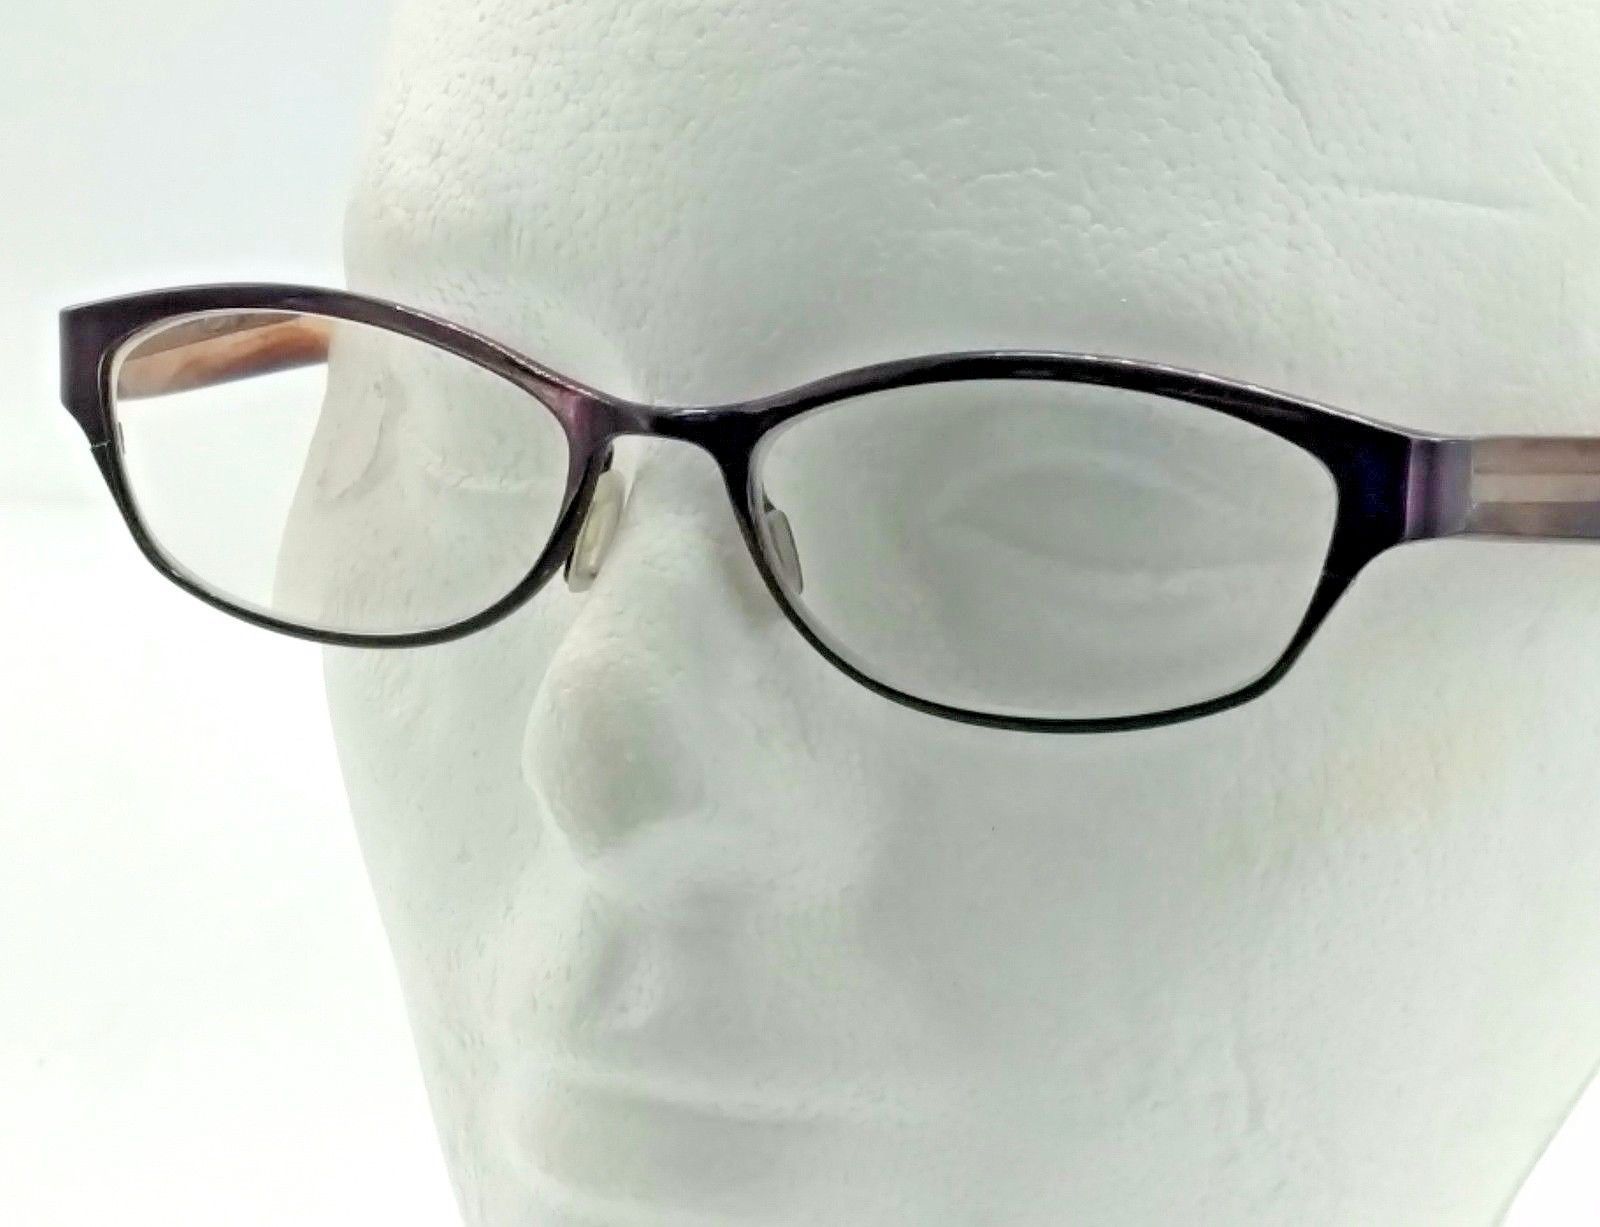 PAUL SMITH EYEWEAR BARBET Frames Eyeglasses Newbury Red Sienna Italy Authentic - $29.00